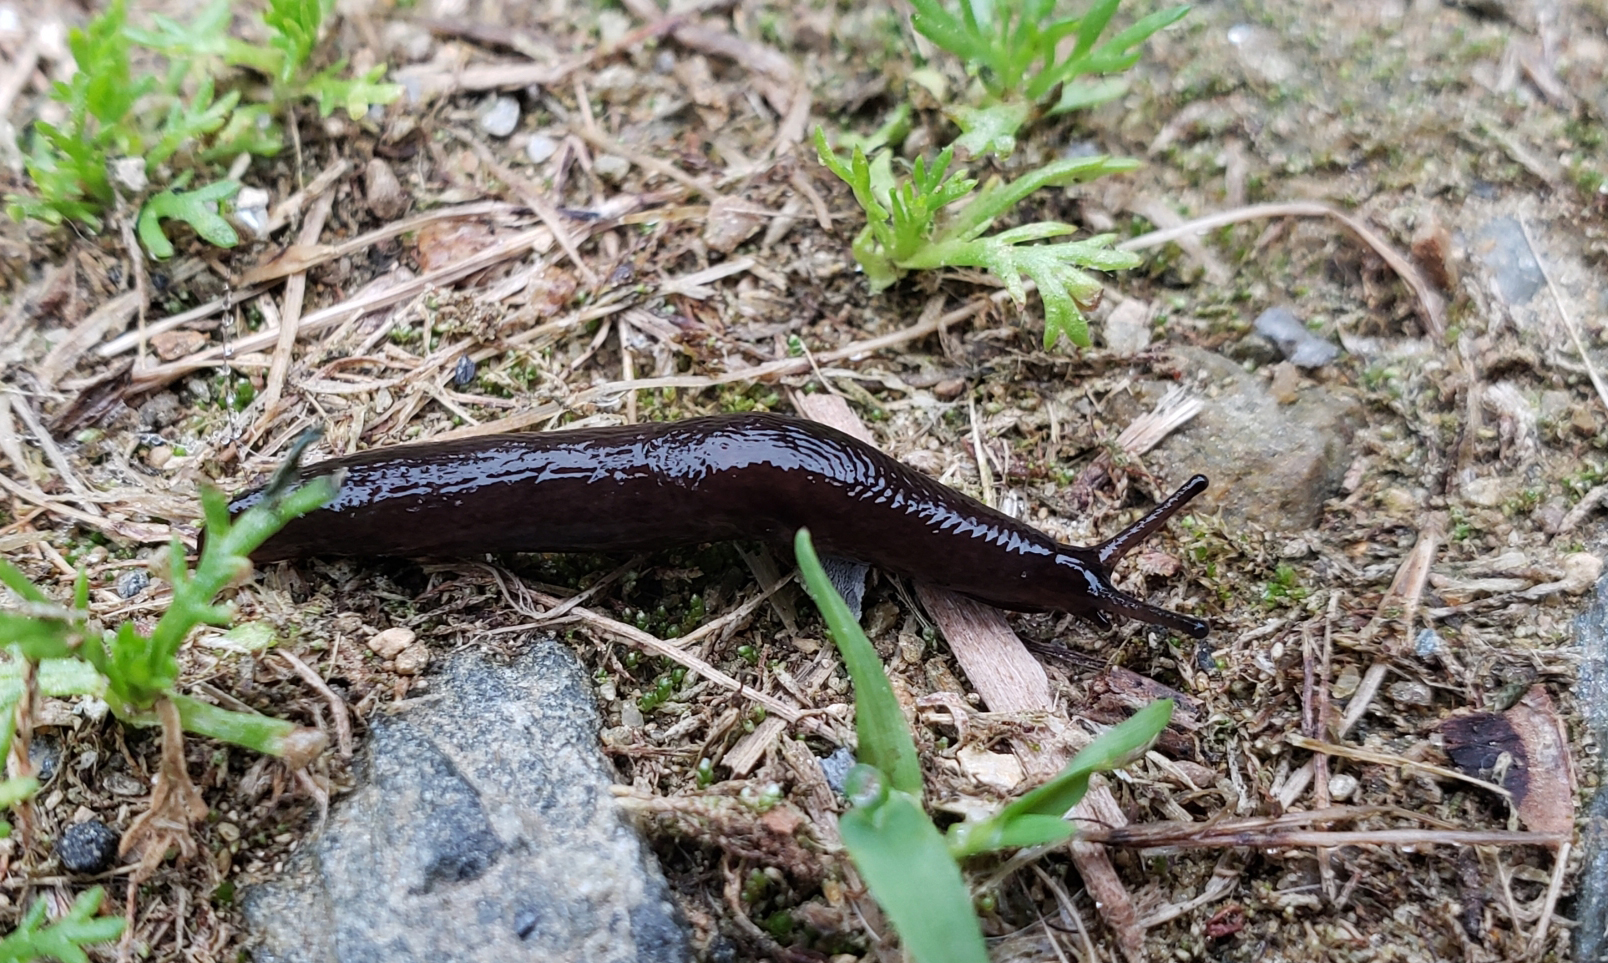 A long, thin black slug moves across the ground.